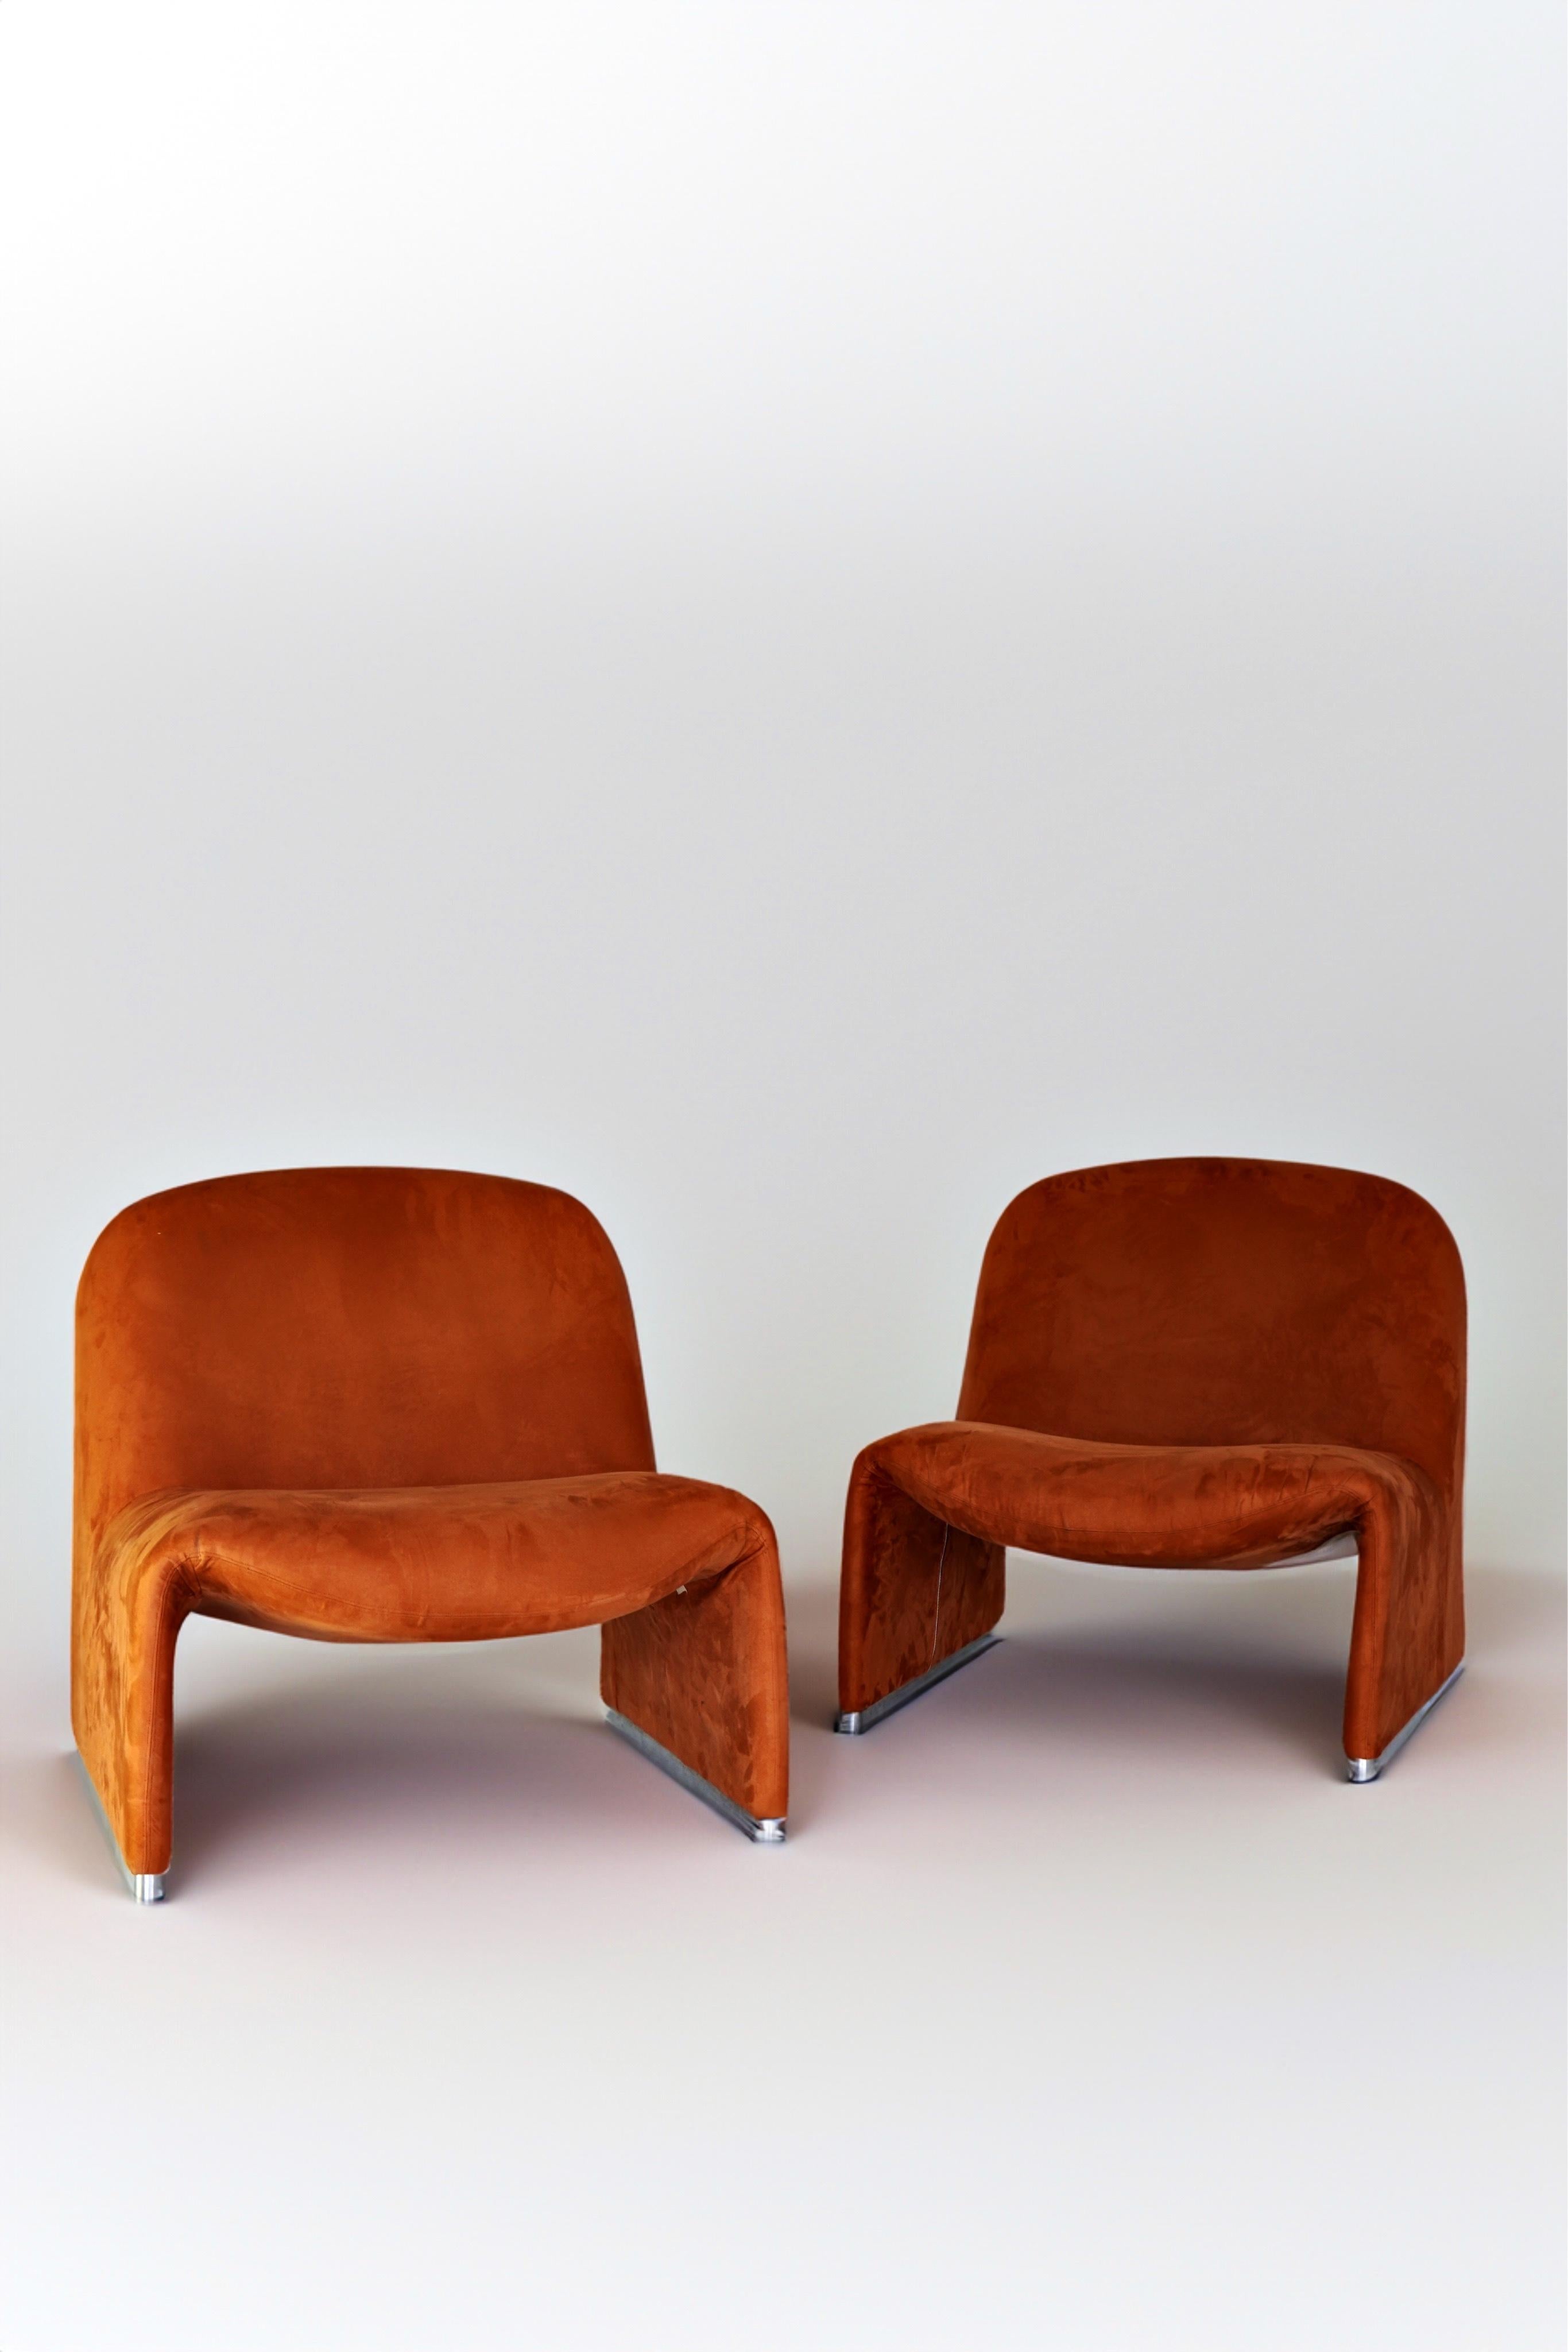 Alky Chair, Giancarlo Piretti for Anonima Castelli, 1970s In Good Condition For Sale In Las Vegas, NV